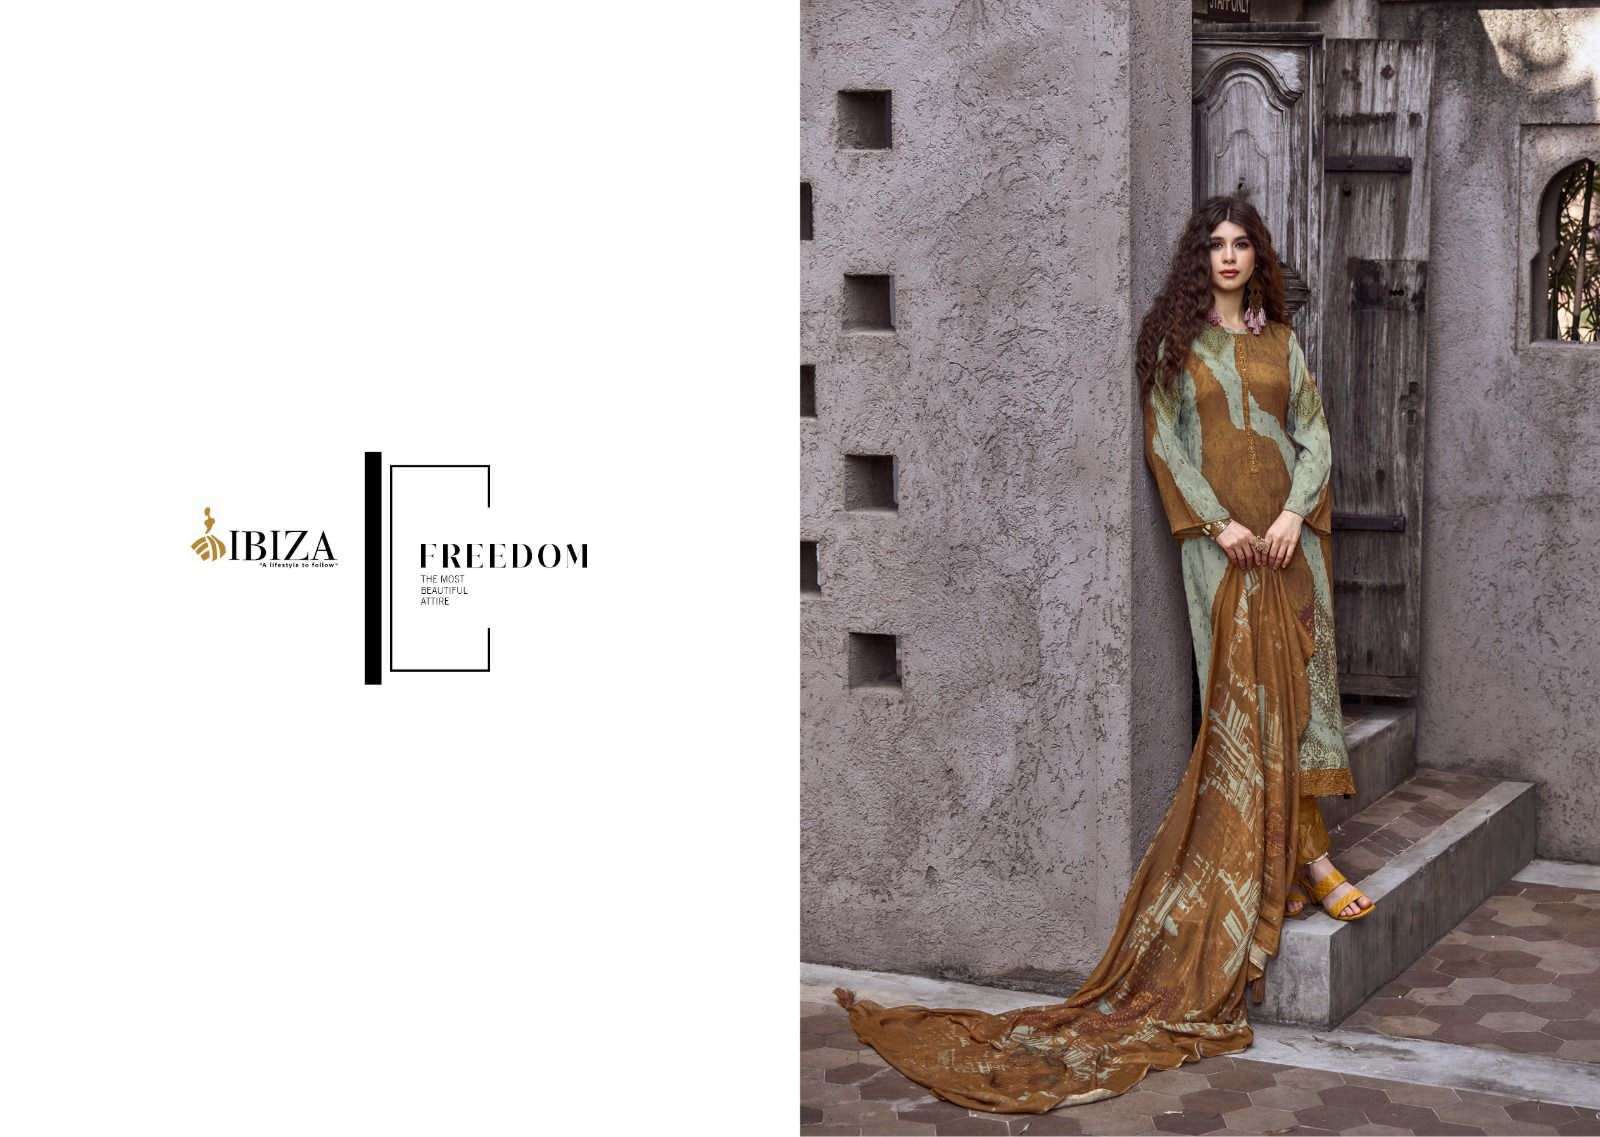 ibiza chinar 12420-12427 series exclusive designer salwar kameez catalogue online market surat 